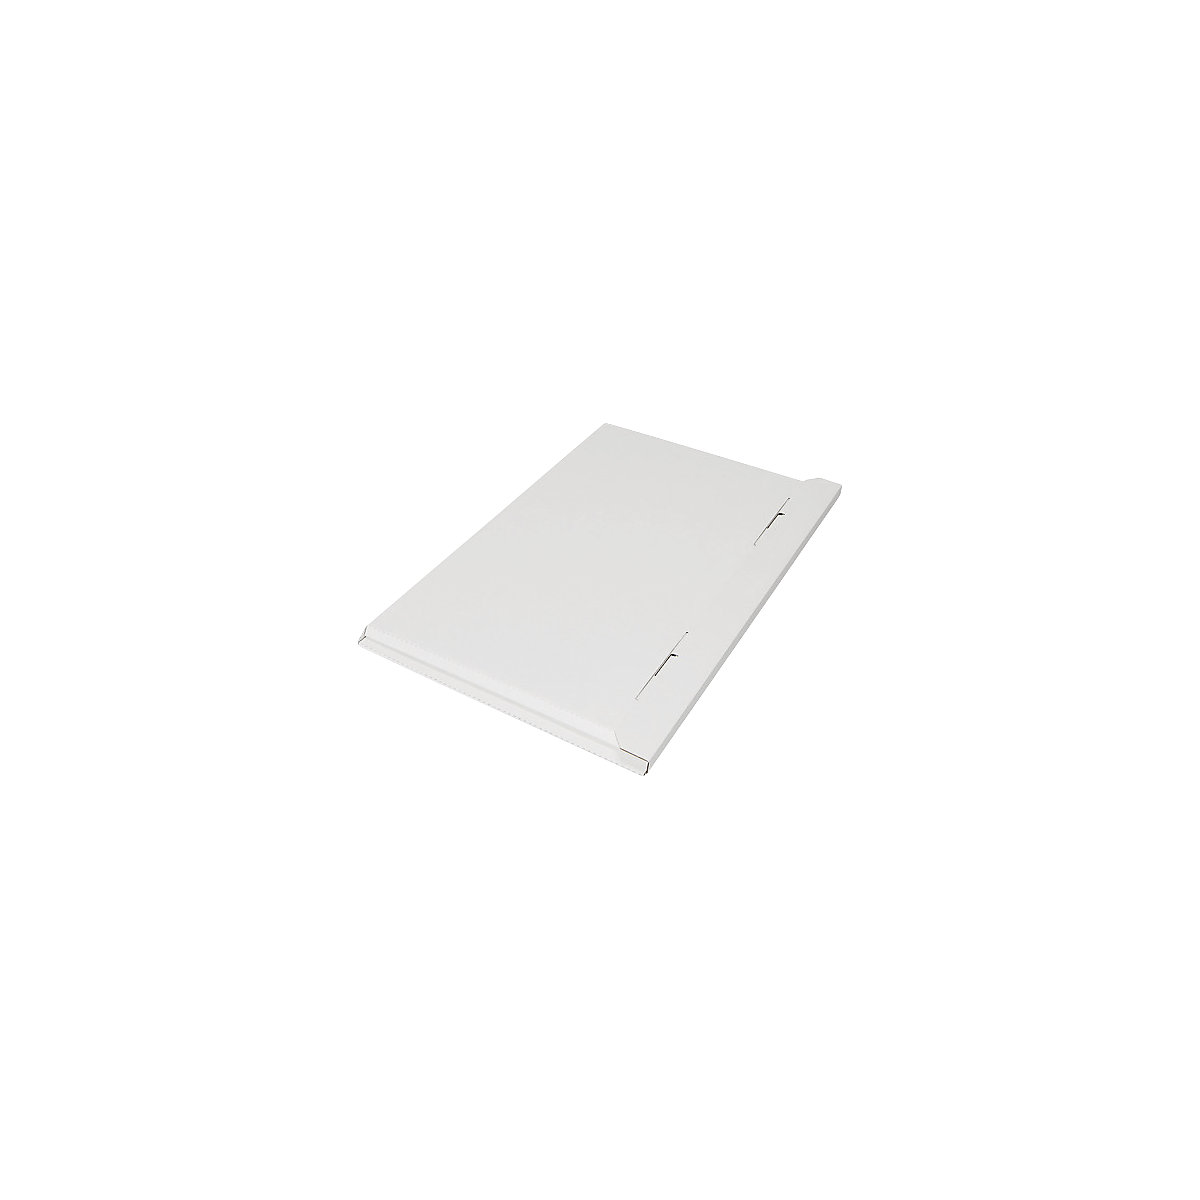 Flach-/Kalender-Pack, 1-wellig, Innen-LxBxH 630 x 450 x 10 mm, weiß, ab 100 Stk-8